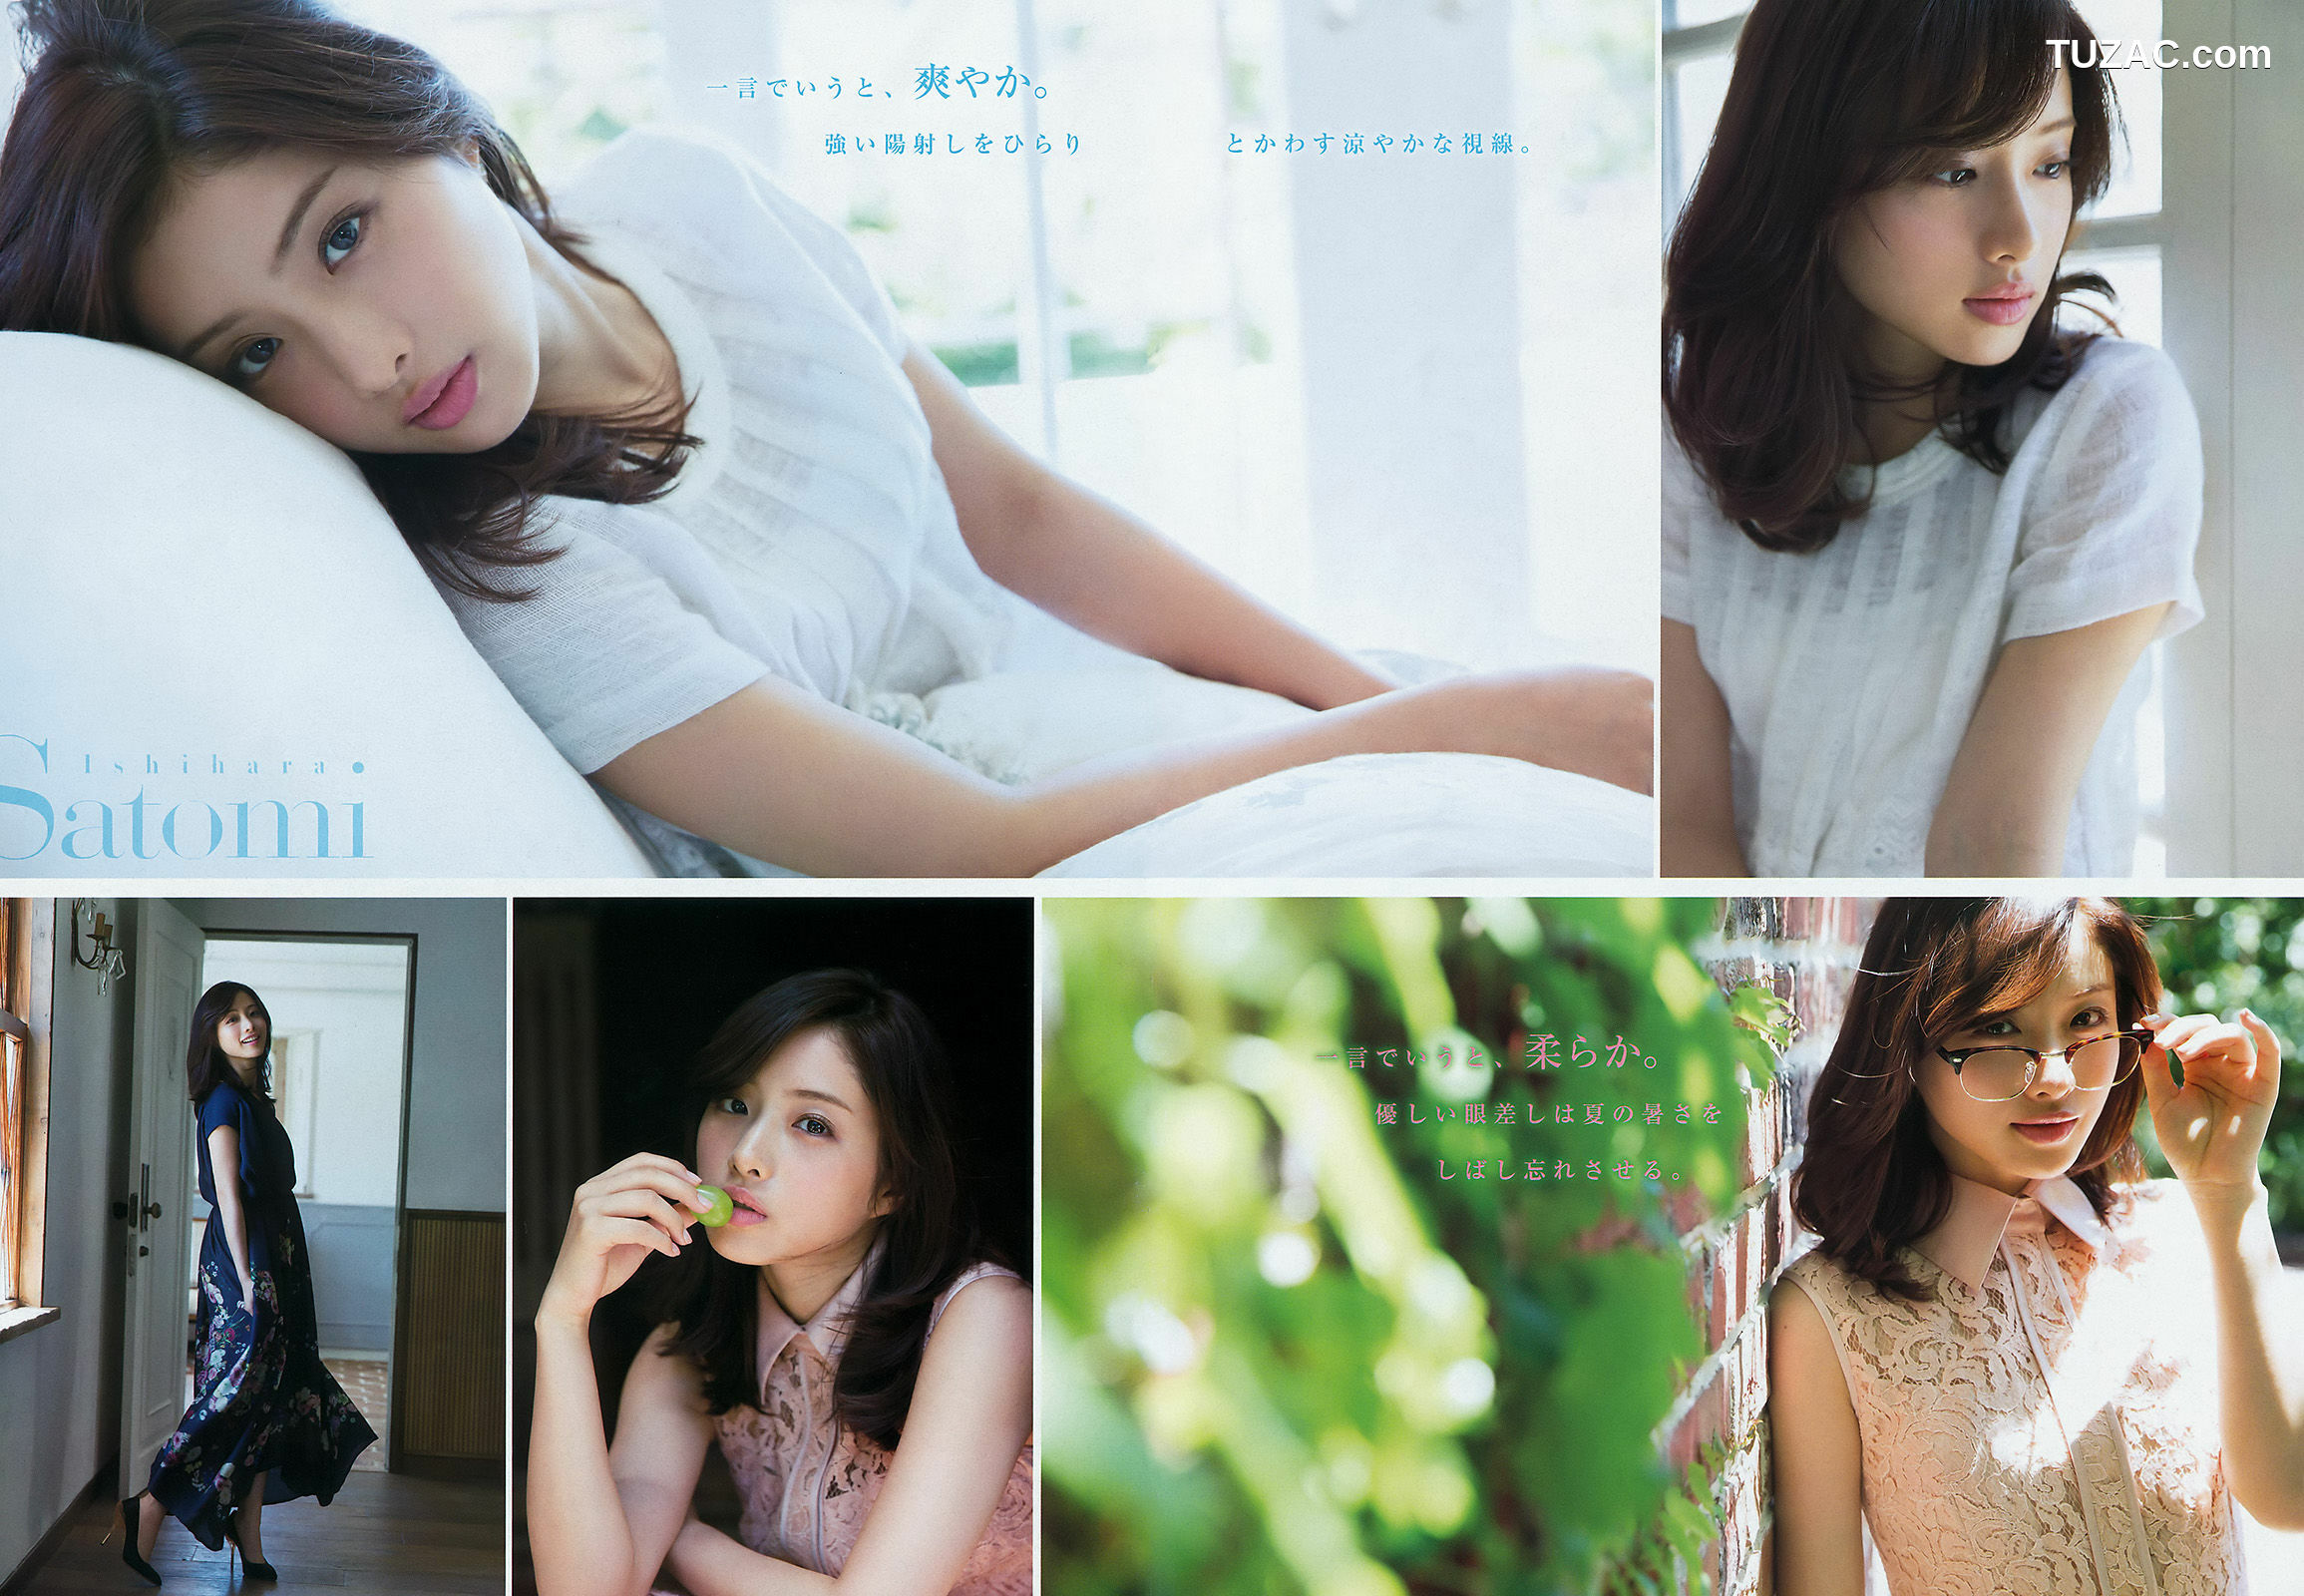 Young Magazine杂志写真_ 石原さとみ 高崎聖子 2015年No.37-38 写真杂志[10P]